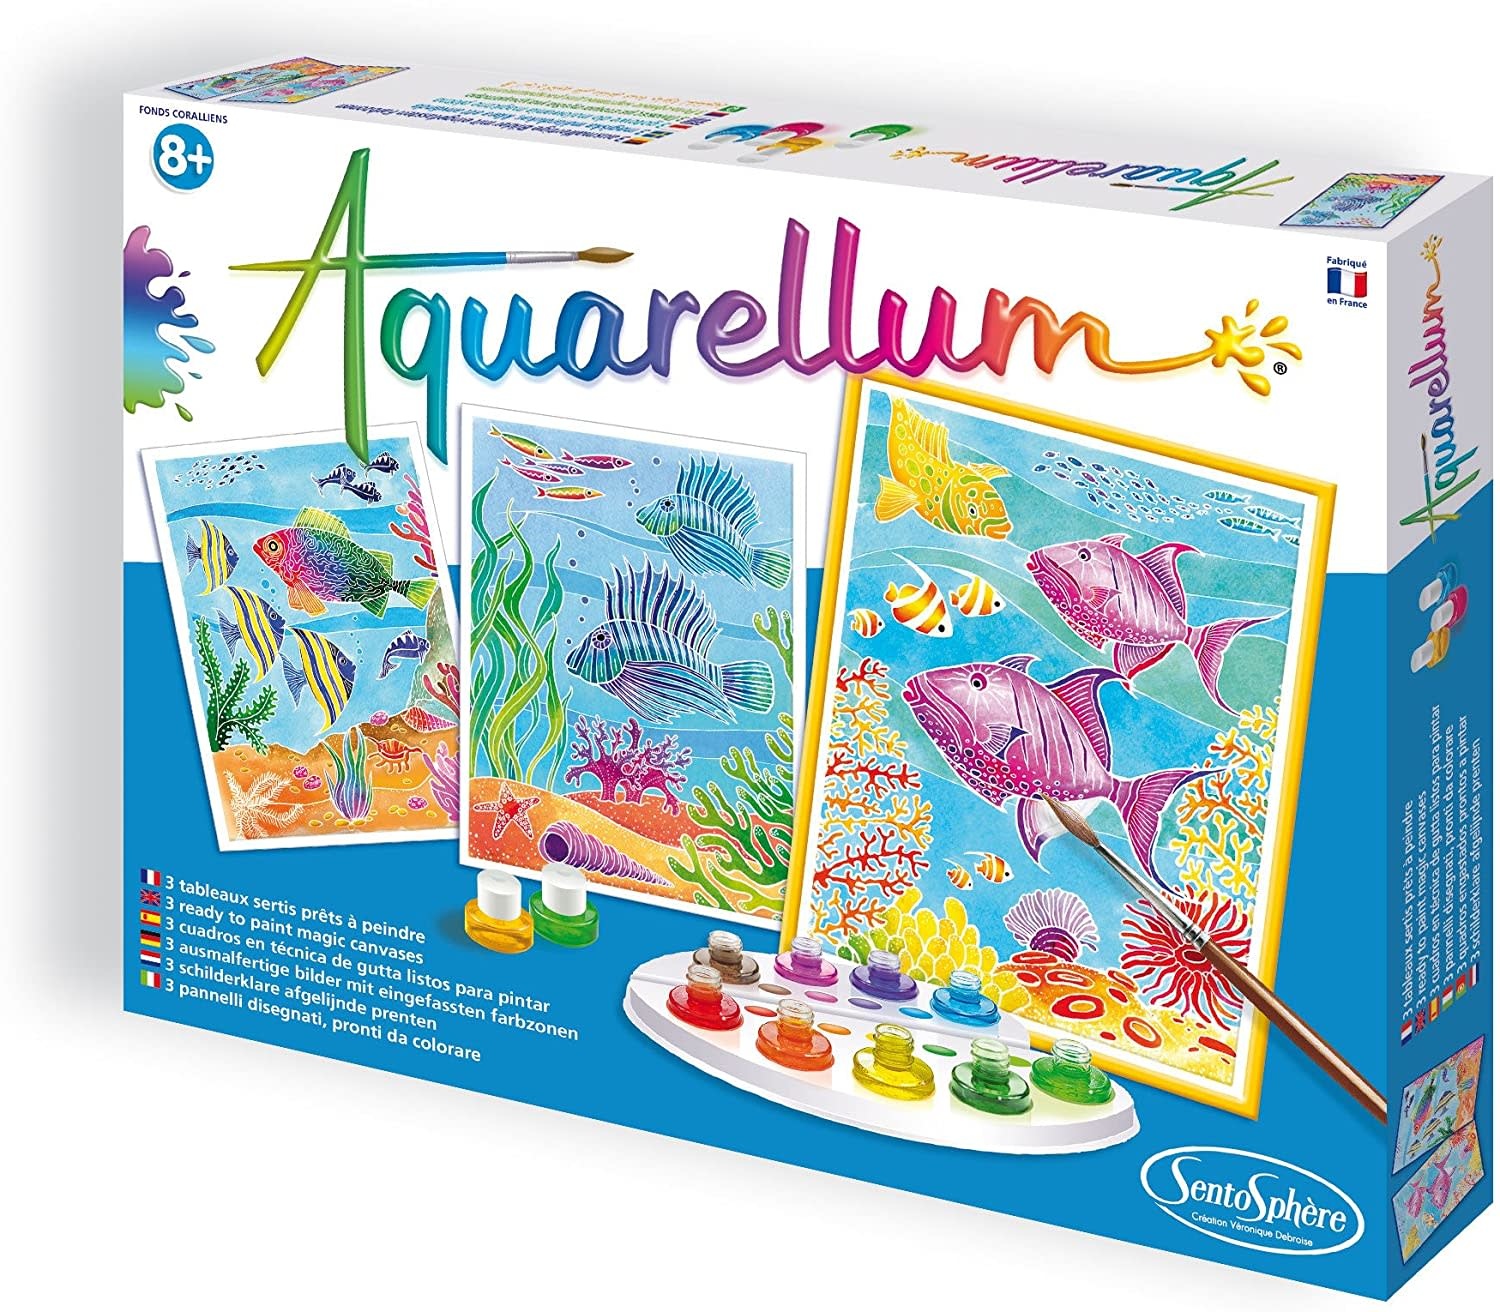 Aquarellum: Jungle Book